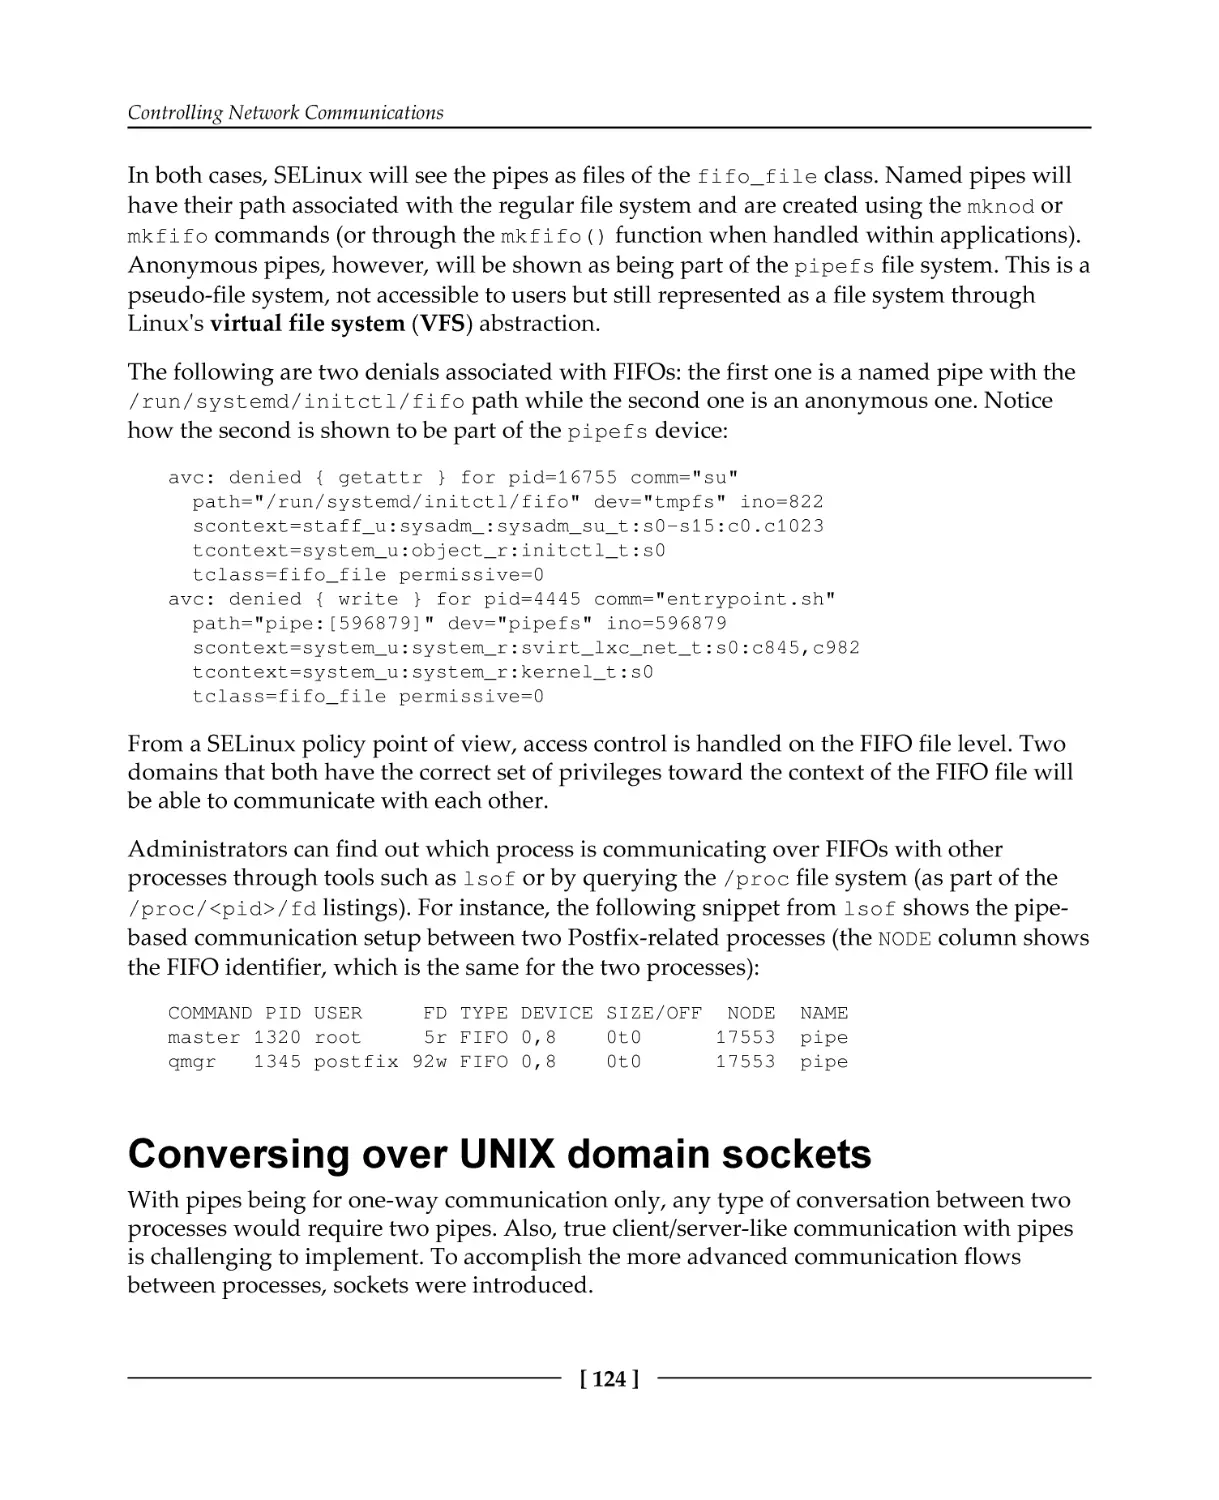 Conversing over UNIX domain sockets